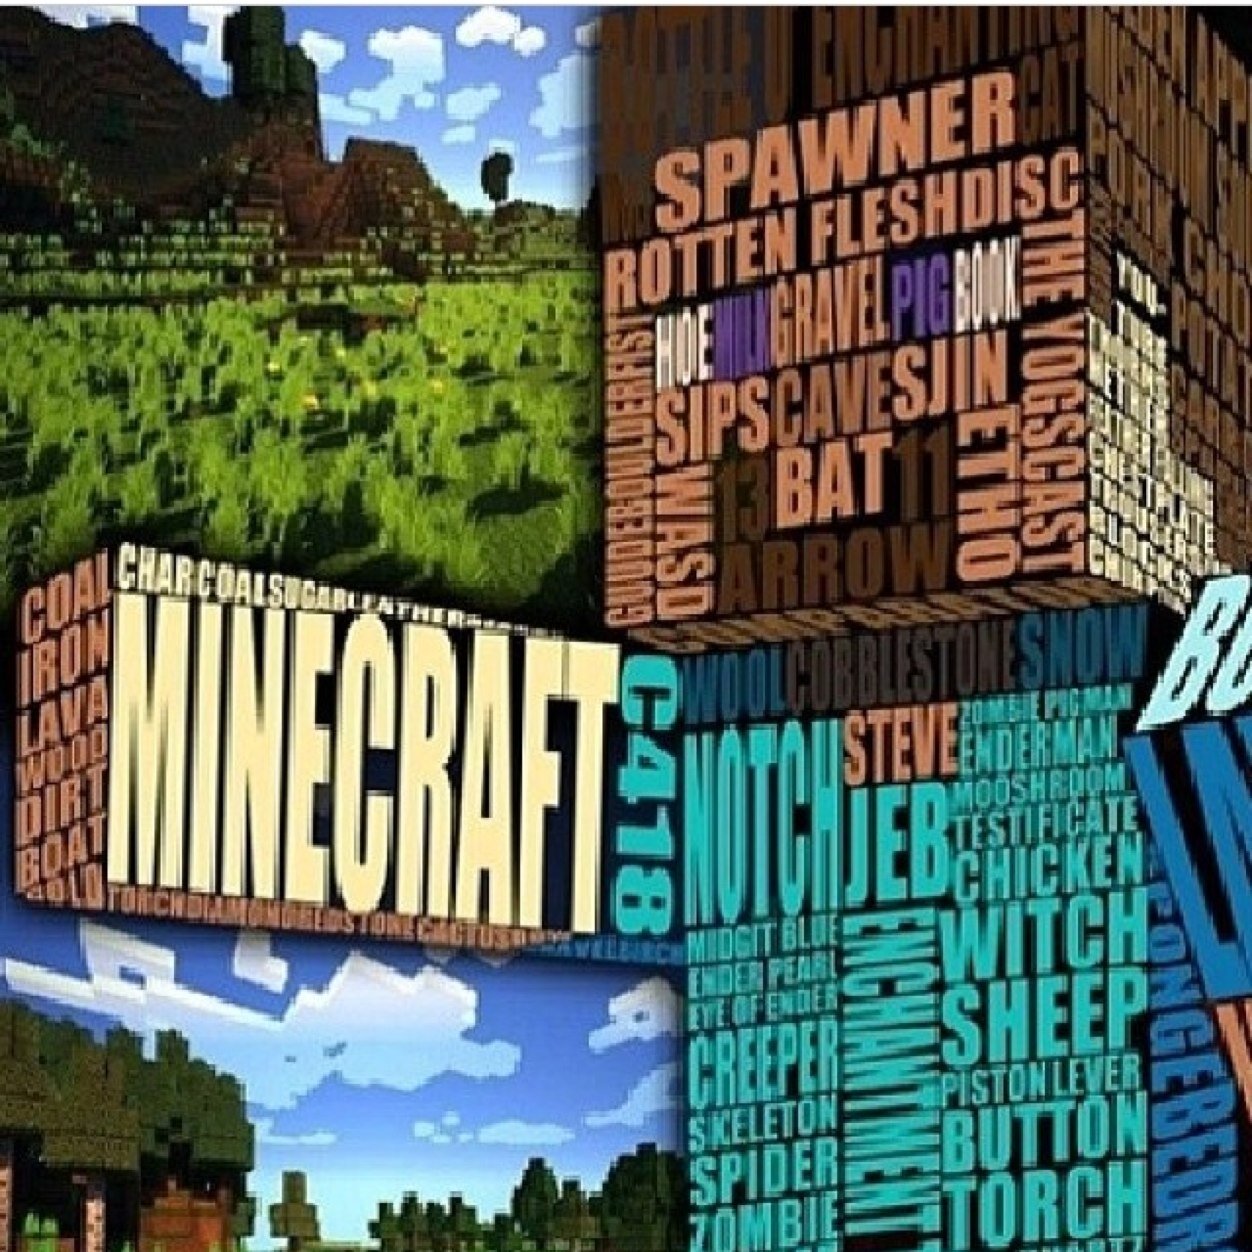 Follow me on Instagram Minecraft1456!